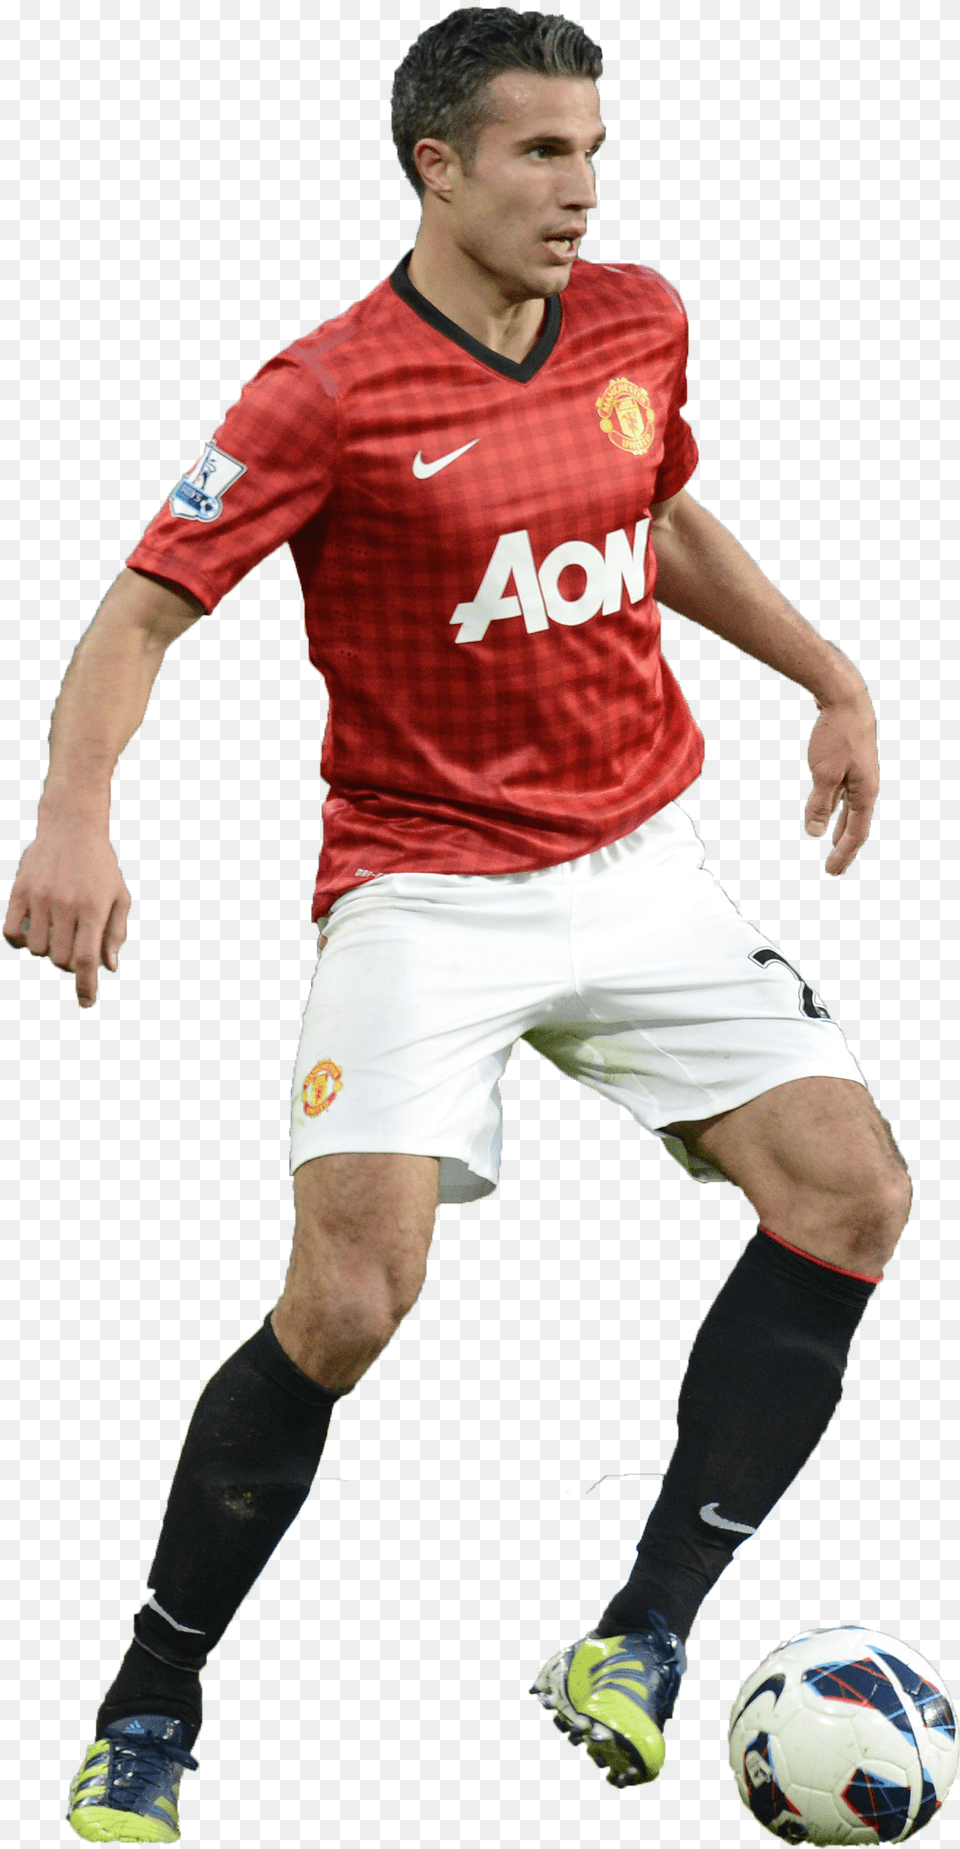 Manchester United Fc Football Renders Robin Van Persie, Ball, Sport, Sphere, Soccer Ball Png